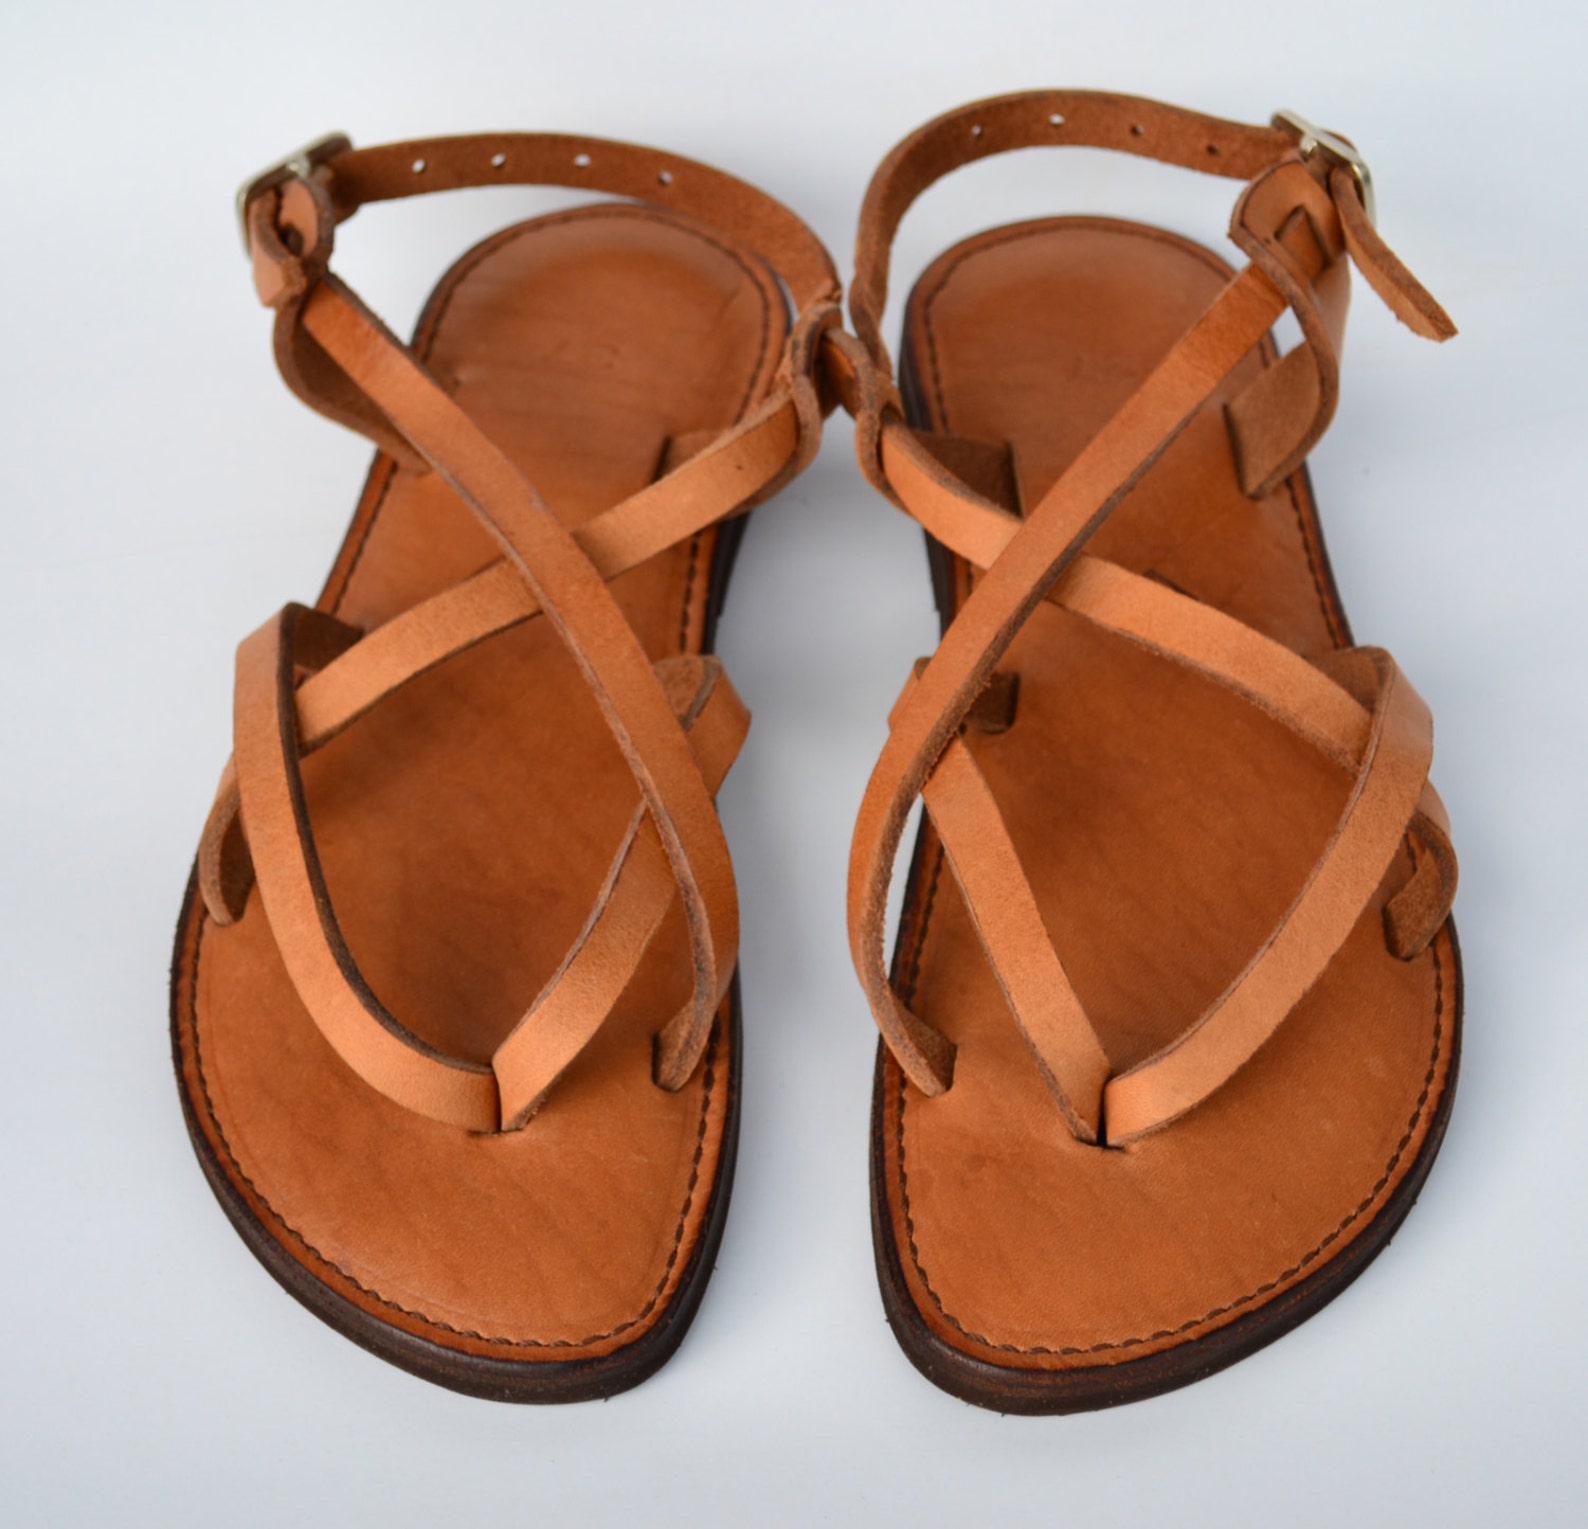 Leather sandals women's sandals camel sandals brown | Etsy